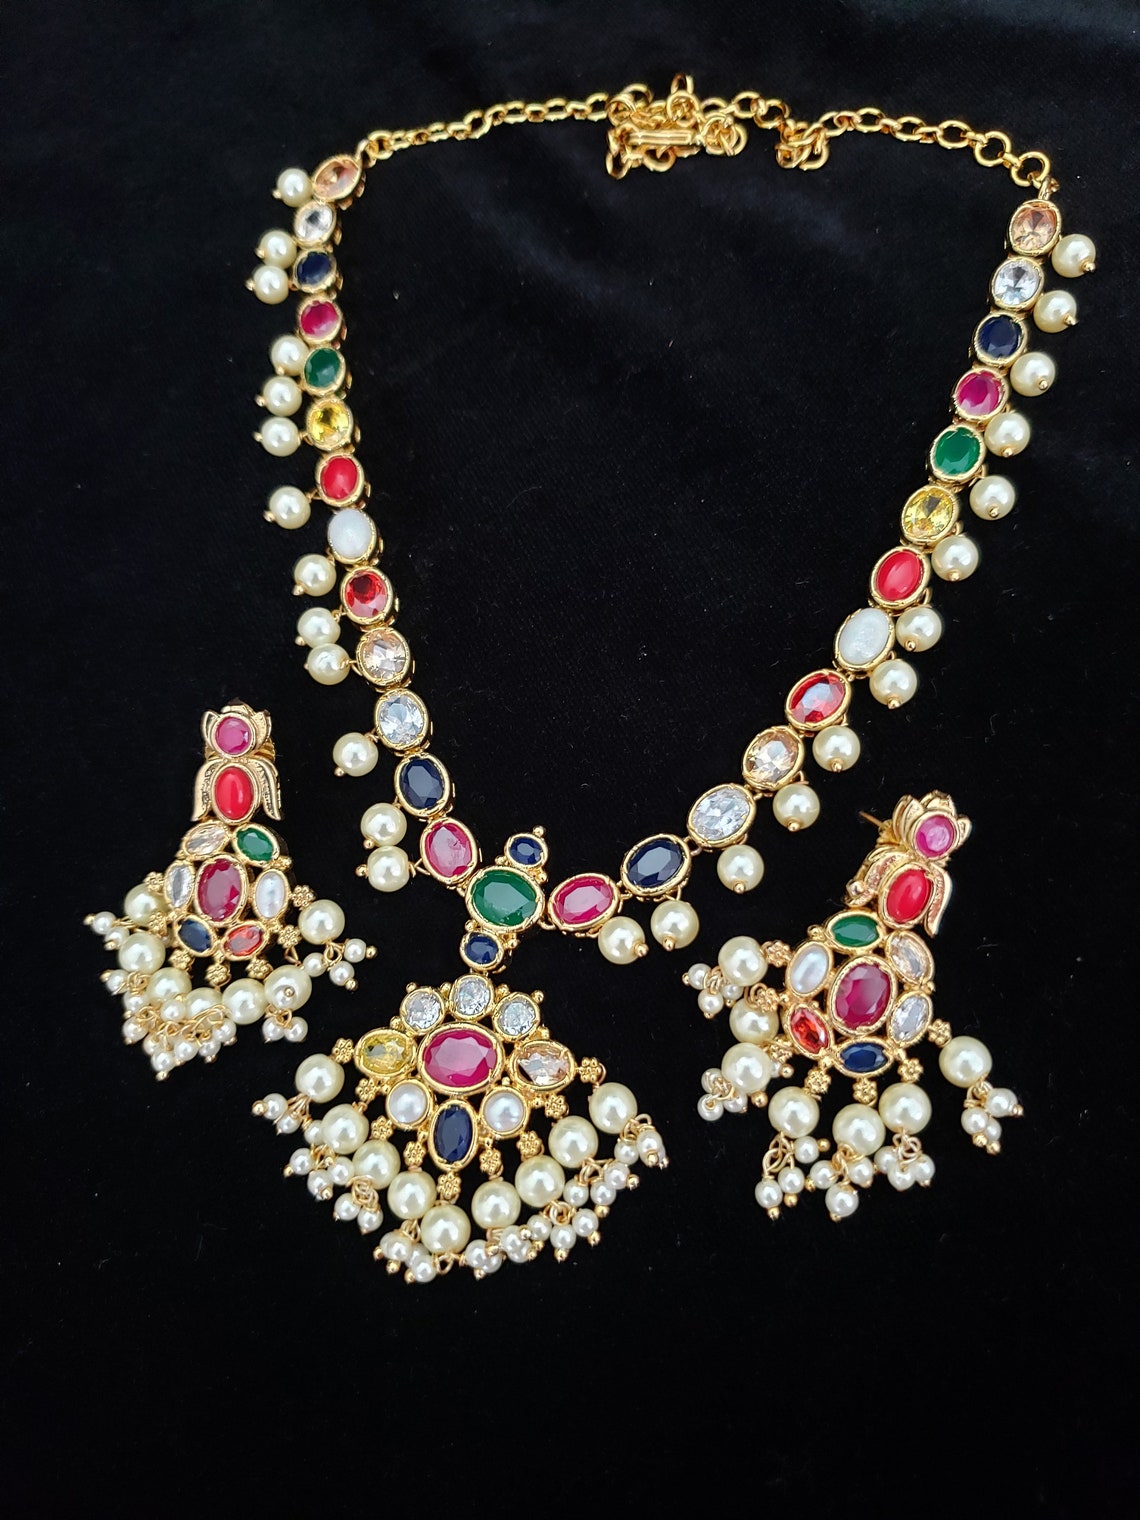 Navaratna Necklace 9 different stones necklace Necklace set | Etsy